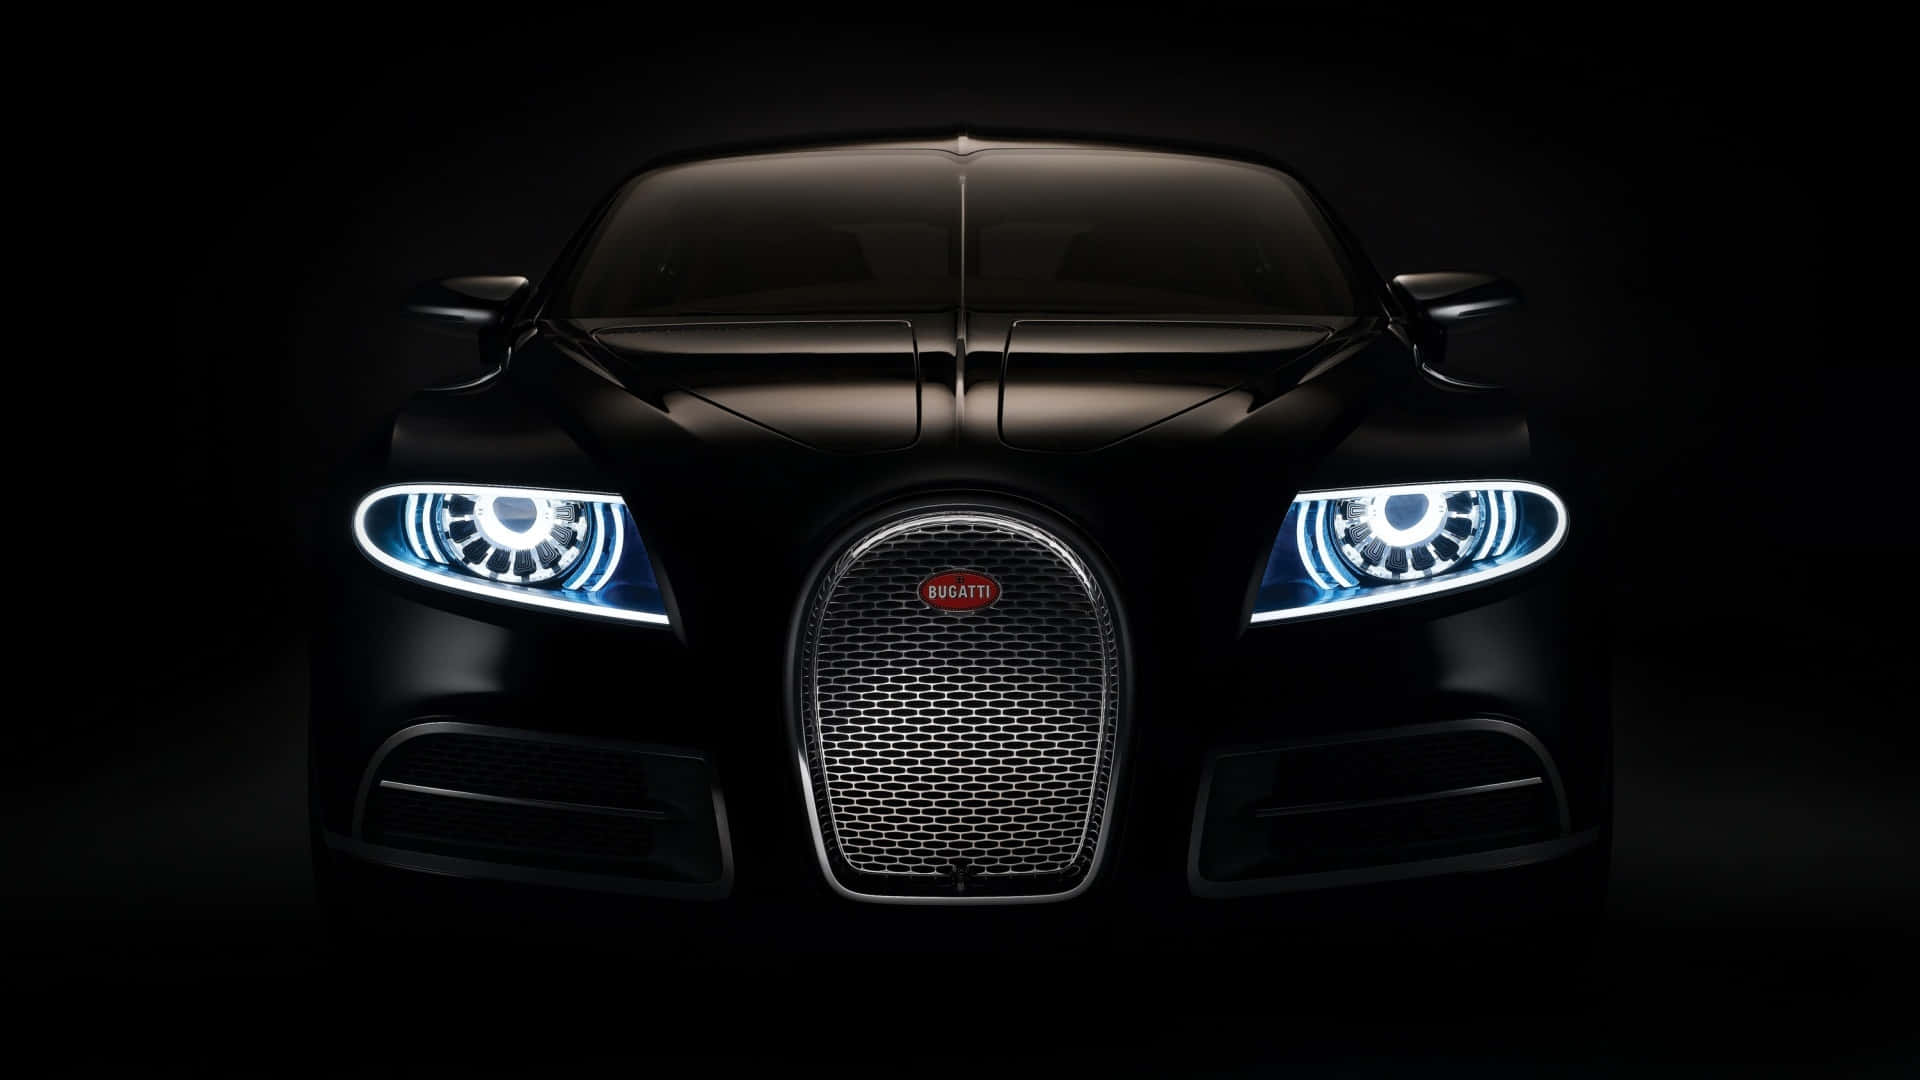 Sleek Bugatti Veyron in Action Wallpaper